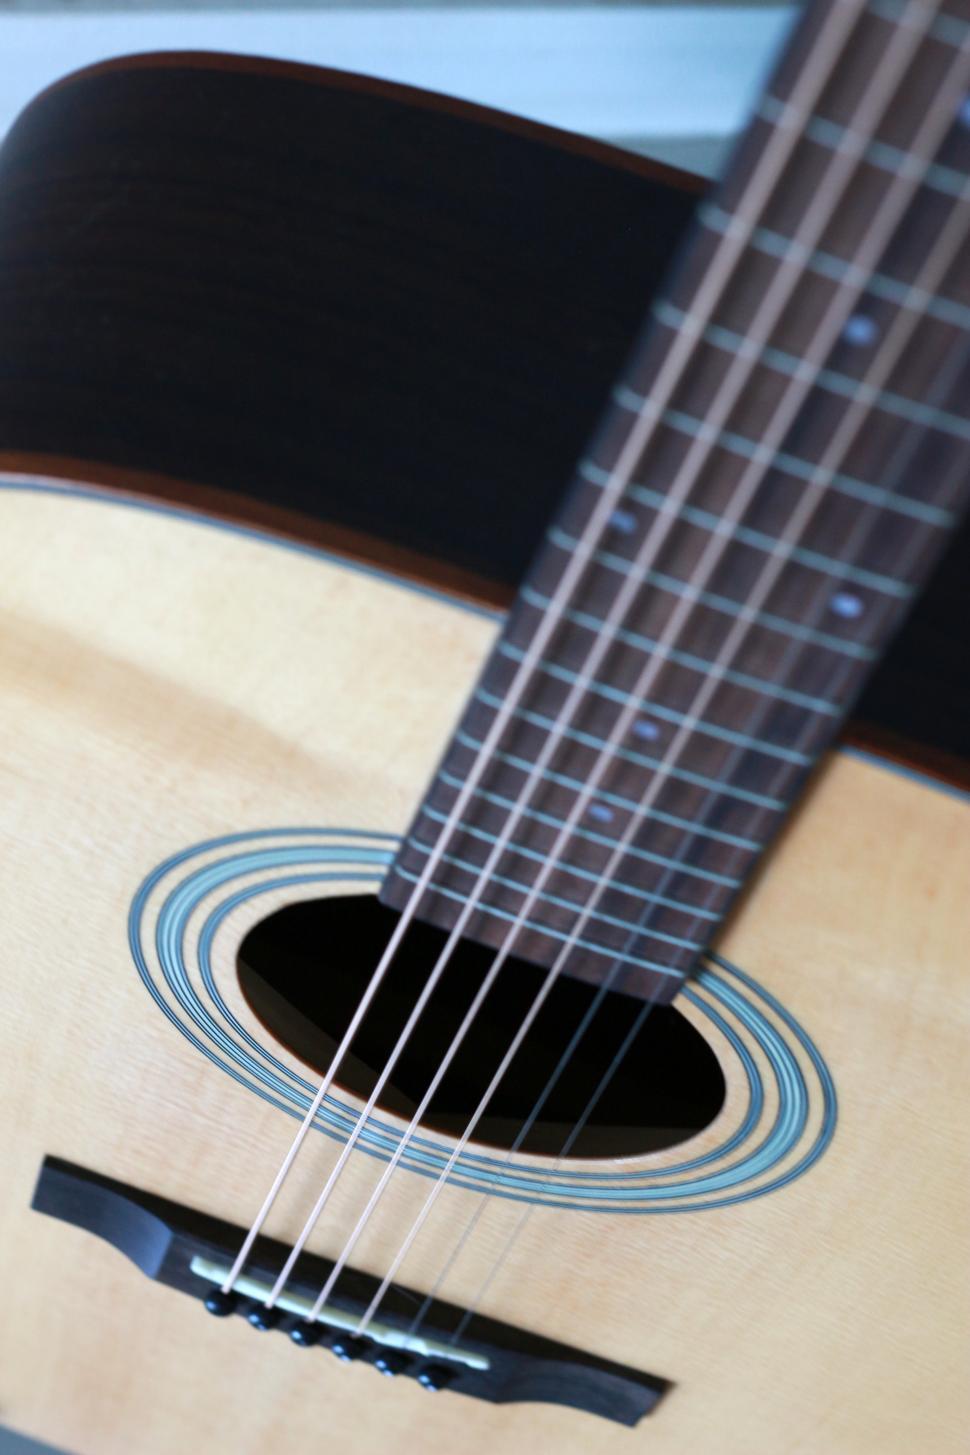 Free Image of Guitar strings close up  